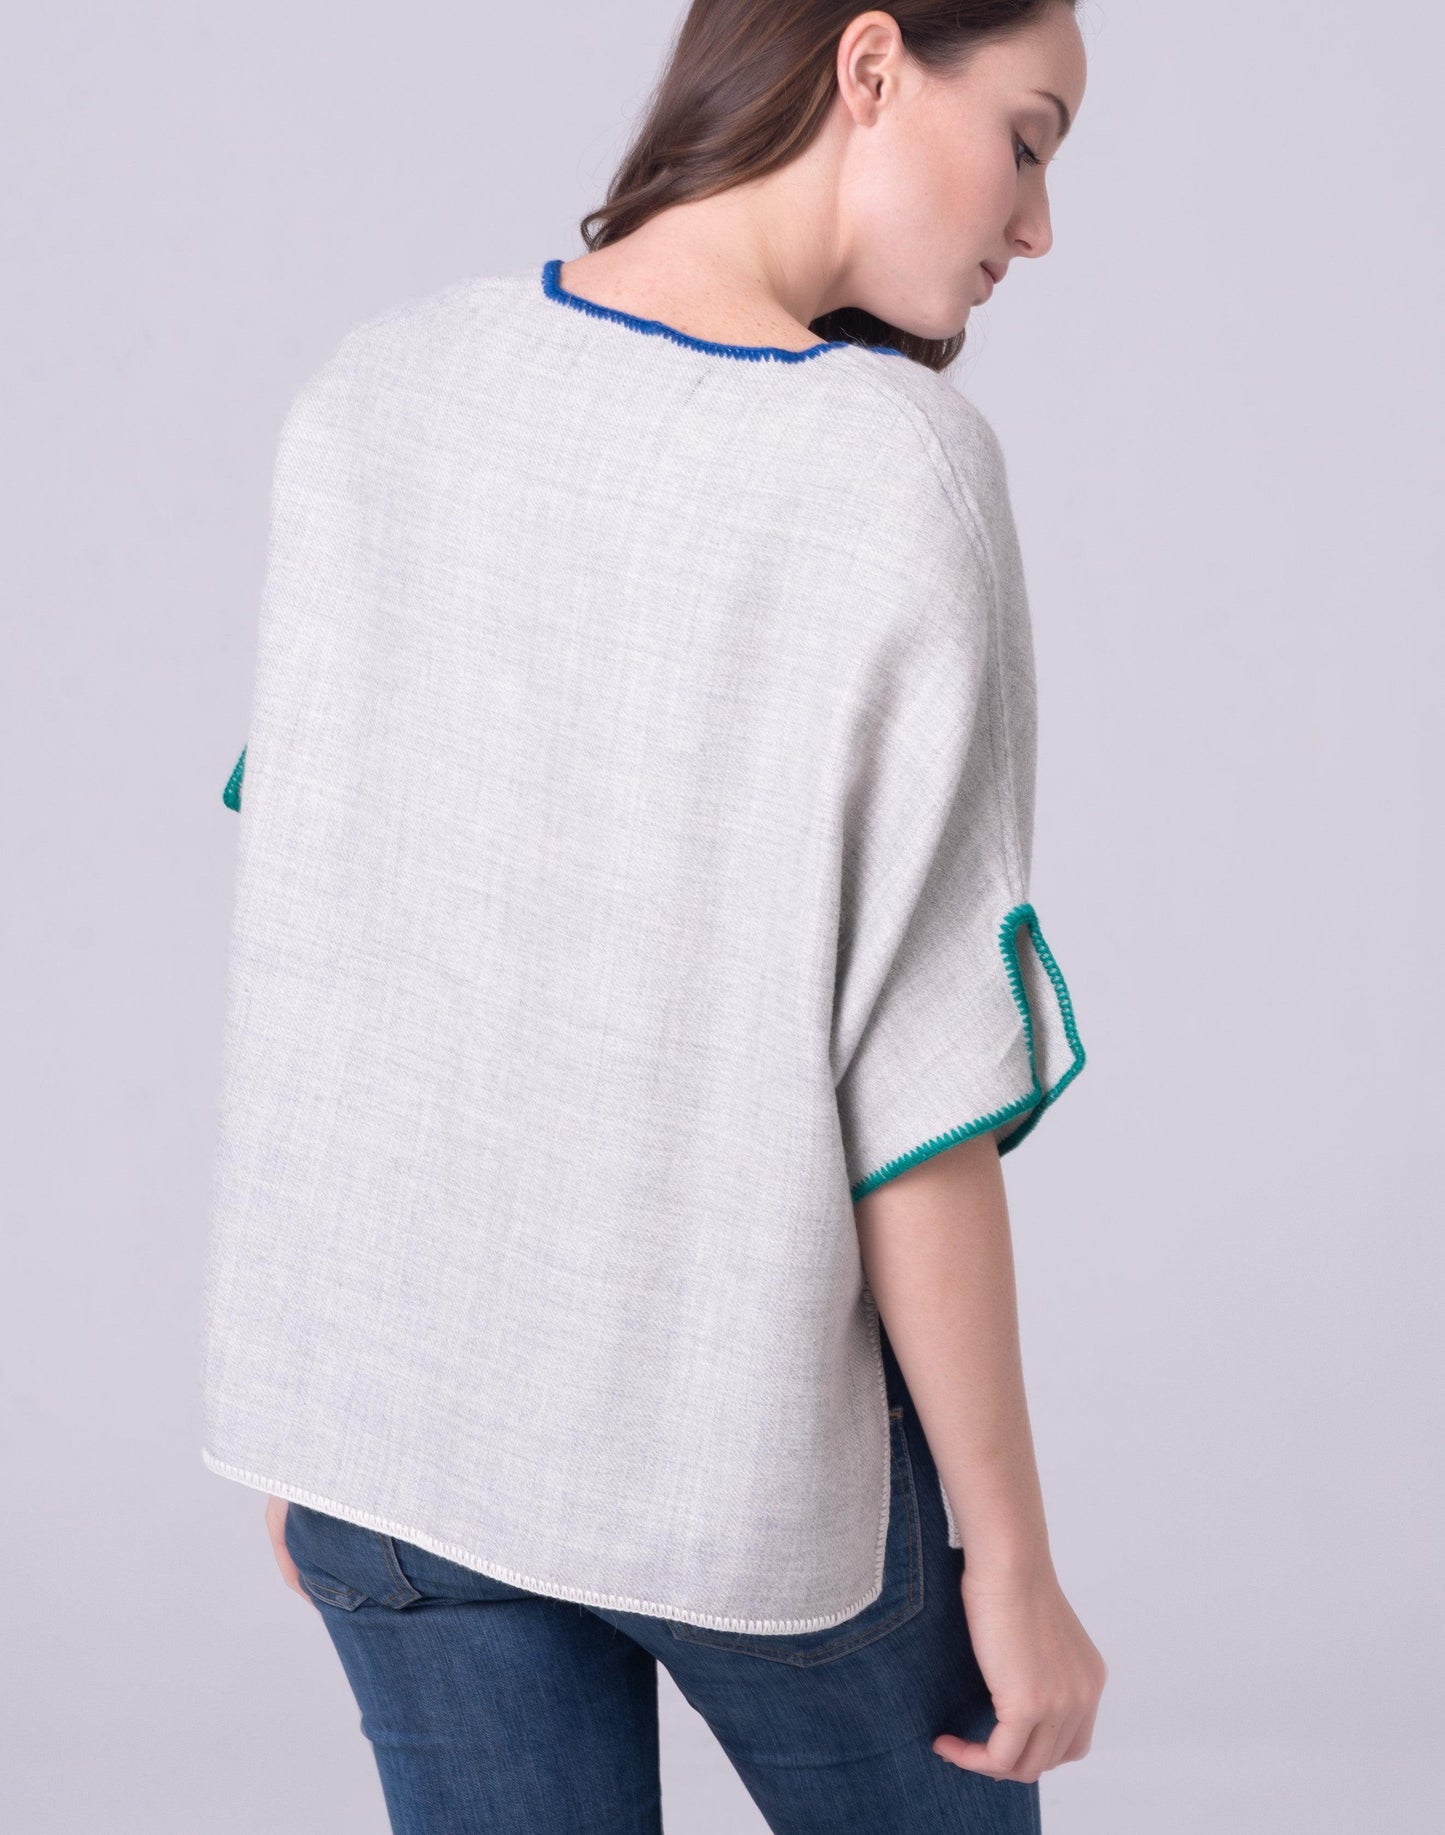 Camiseta manga corta 100% baby alpaca color gris claro - Be ALPACA